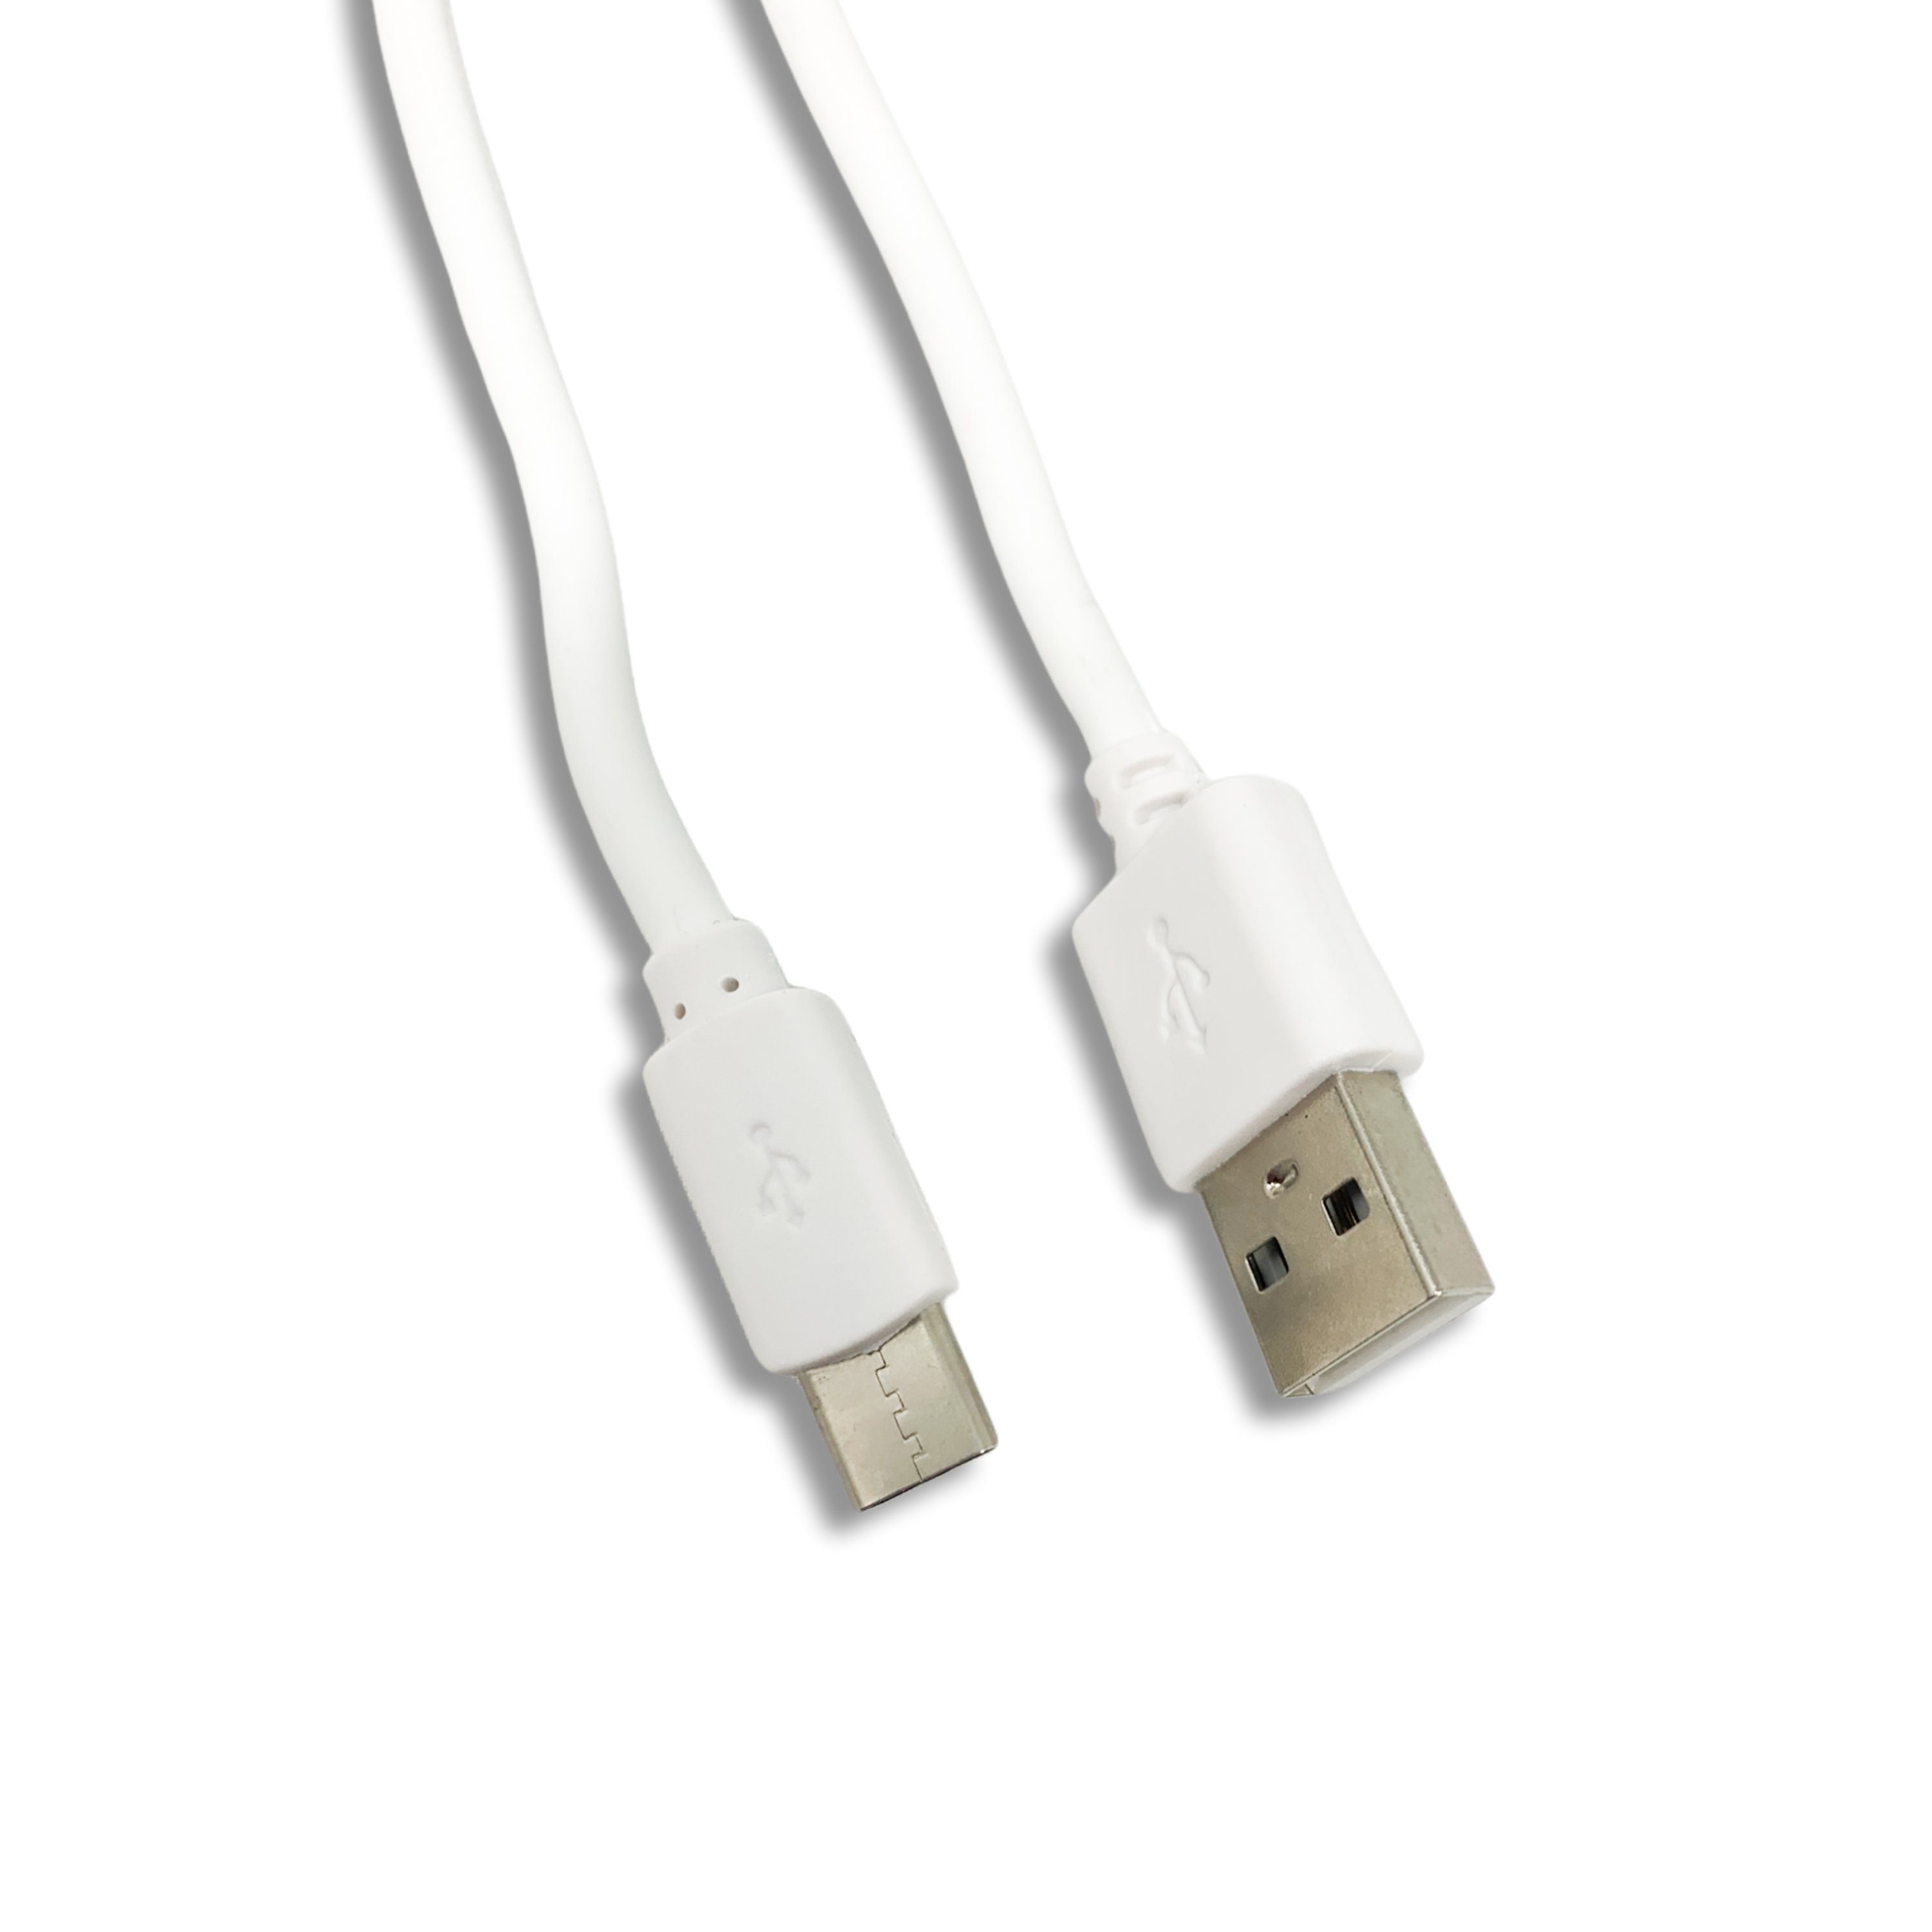 H-basics Ladekabel USB-C 3 meter - für neue modelle Samsung, Huawei,  Xiaomi, Oneplus etc. 2.1A Output Lightningkabel, (300 cm)